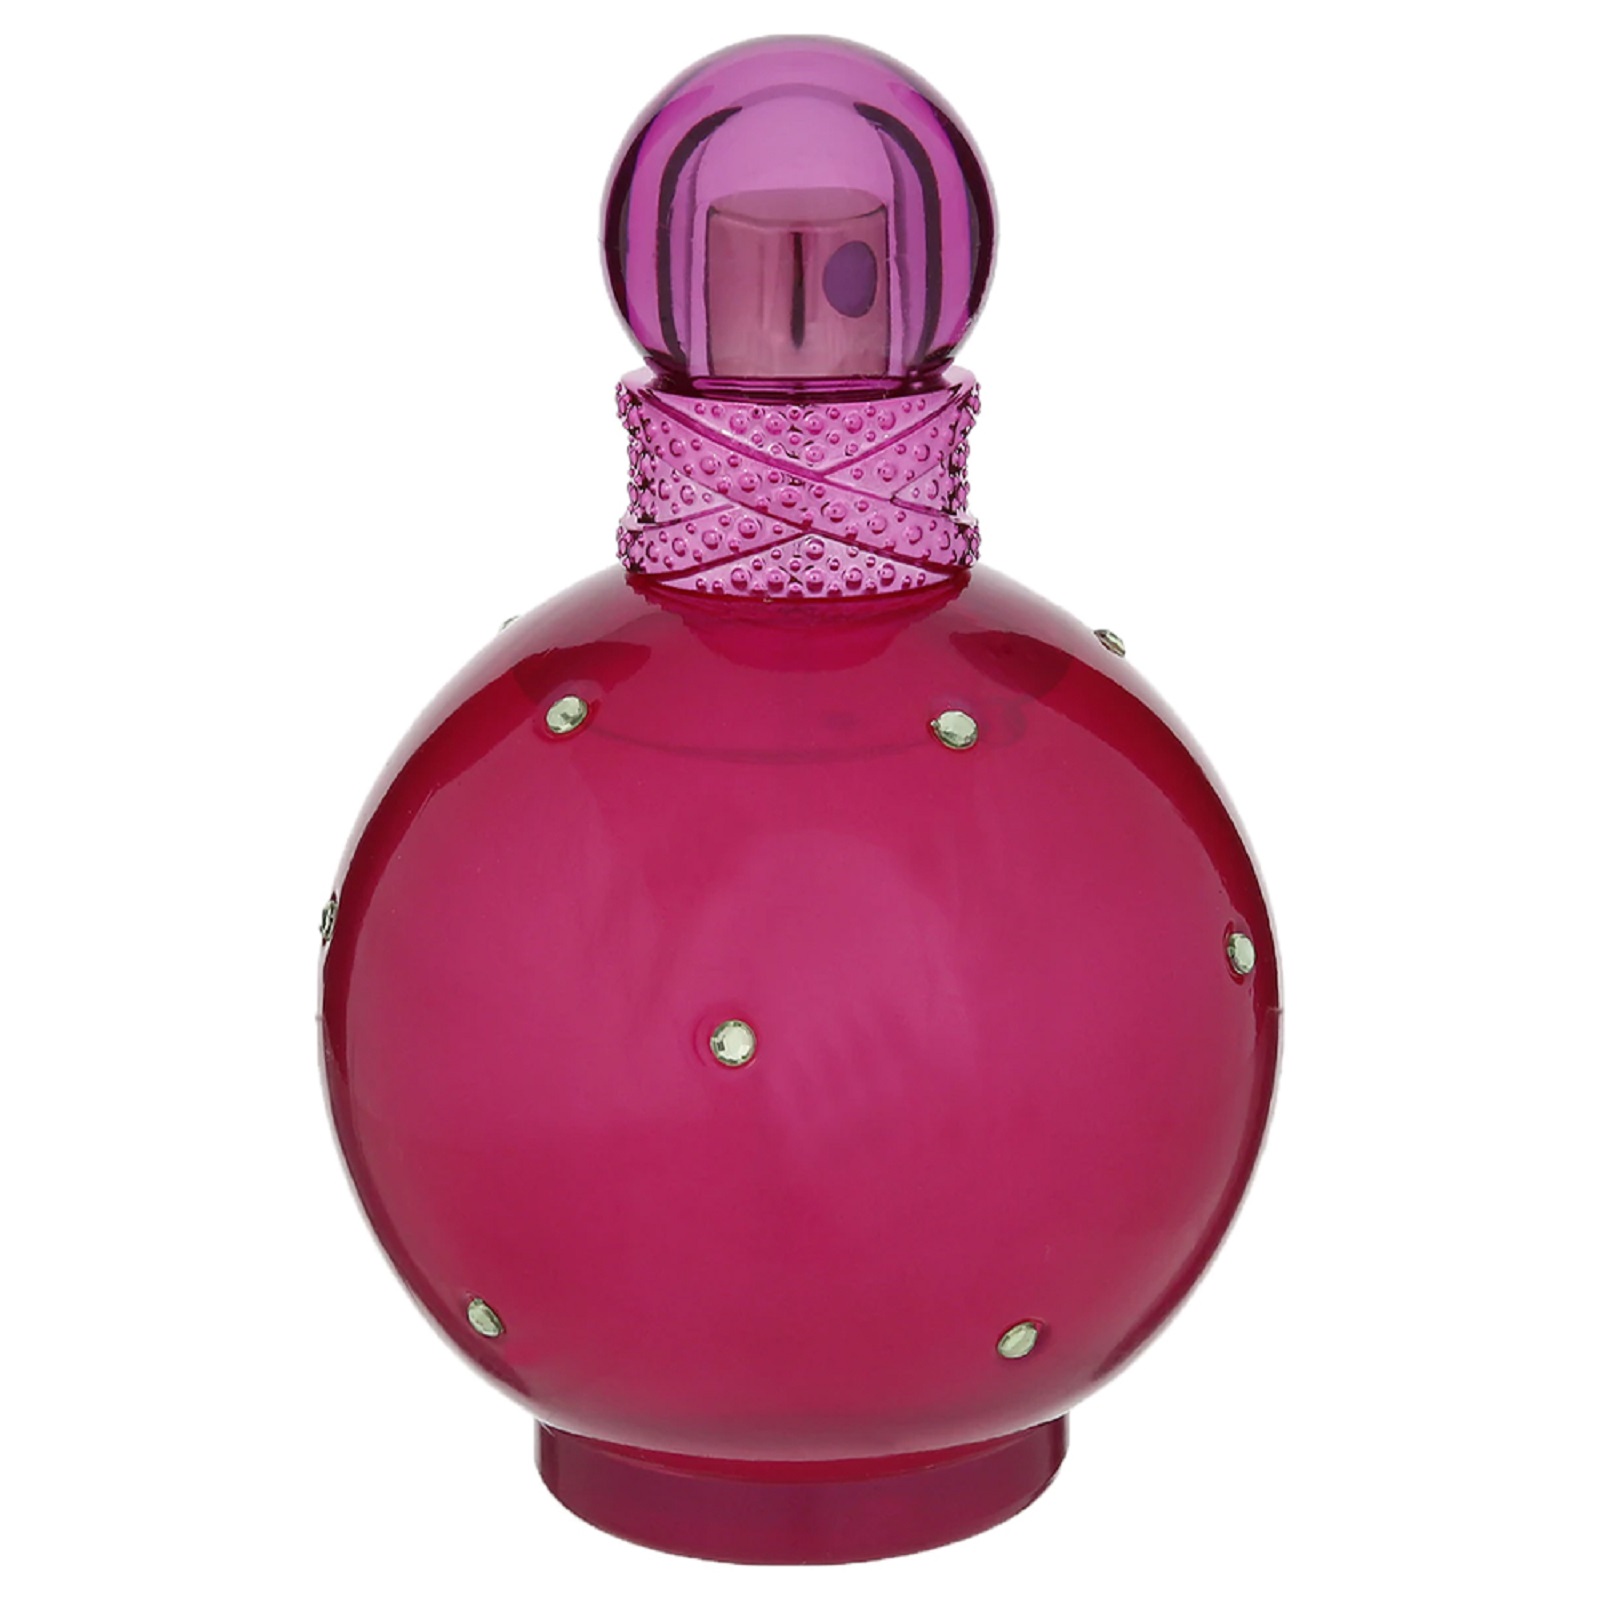 Perfume Mujer Fantasy Eau de Parfum 100ml Britney Spears